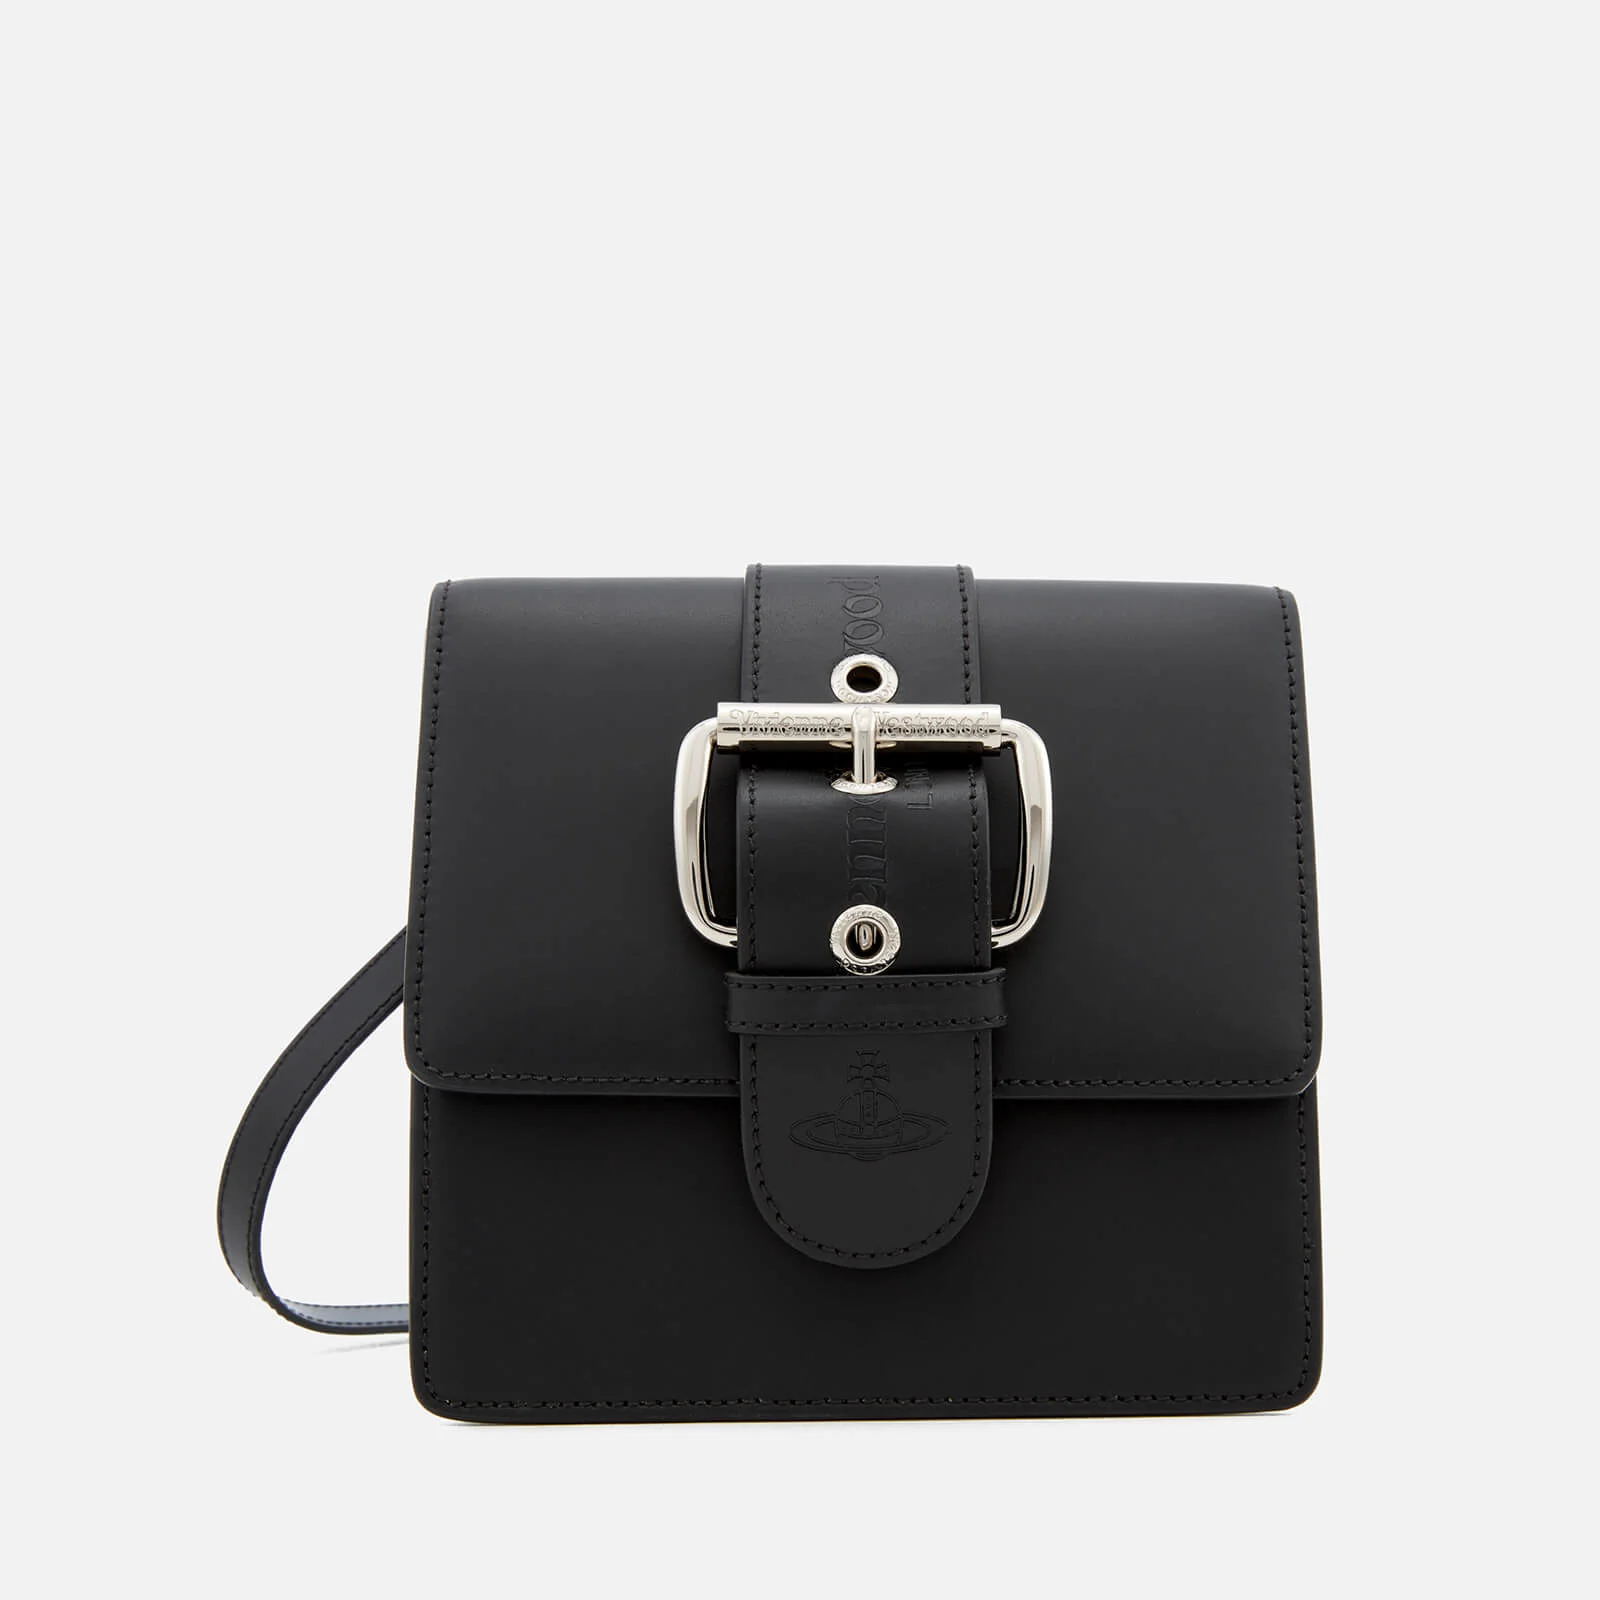 Vivienne Westwood Women's Alex Small Handbag - Black Image 1